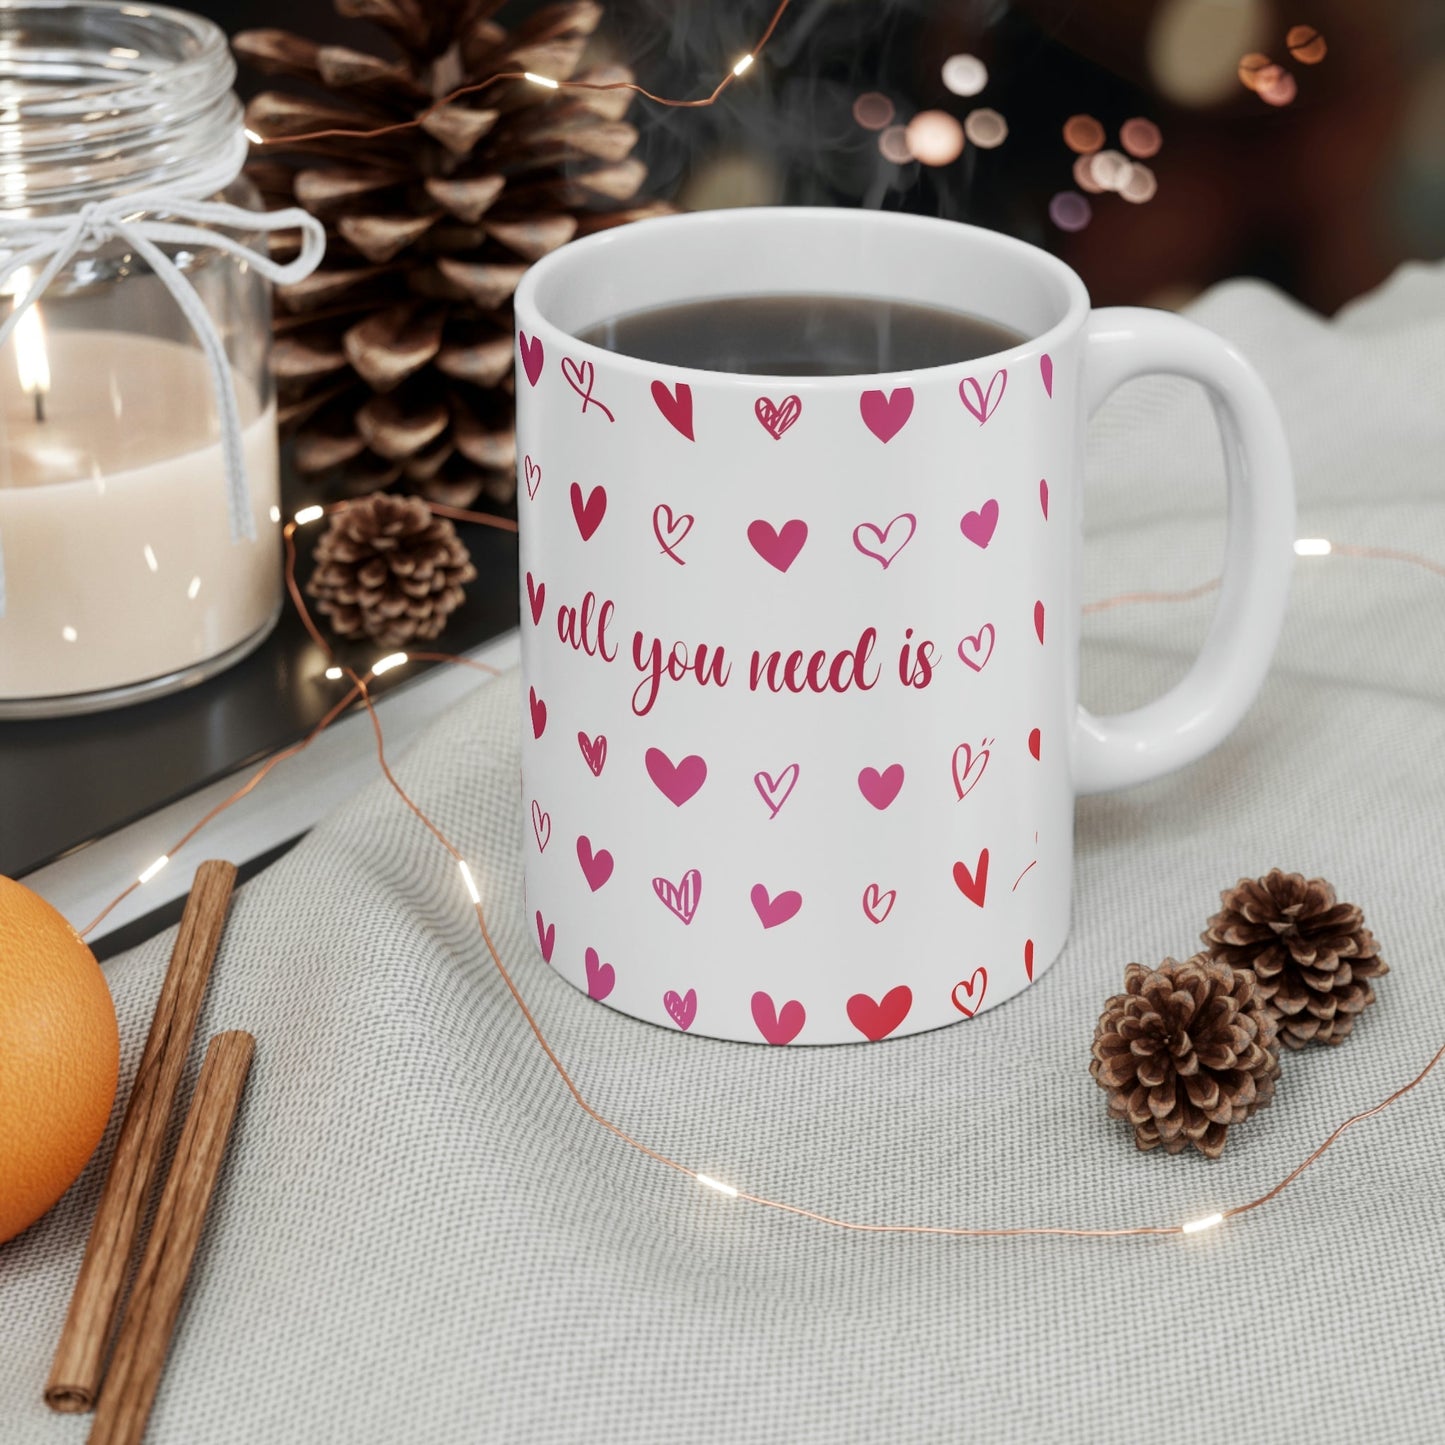 Love Is All You Need Ceramic Mug 11oz Ichaku [Perfect Gifts Selection]